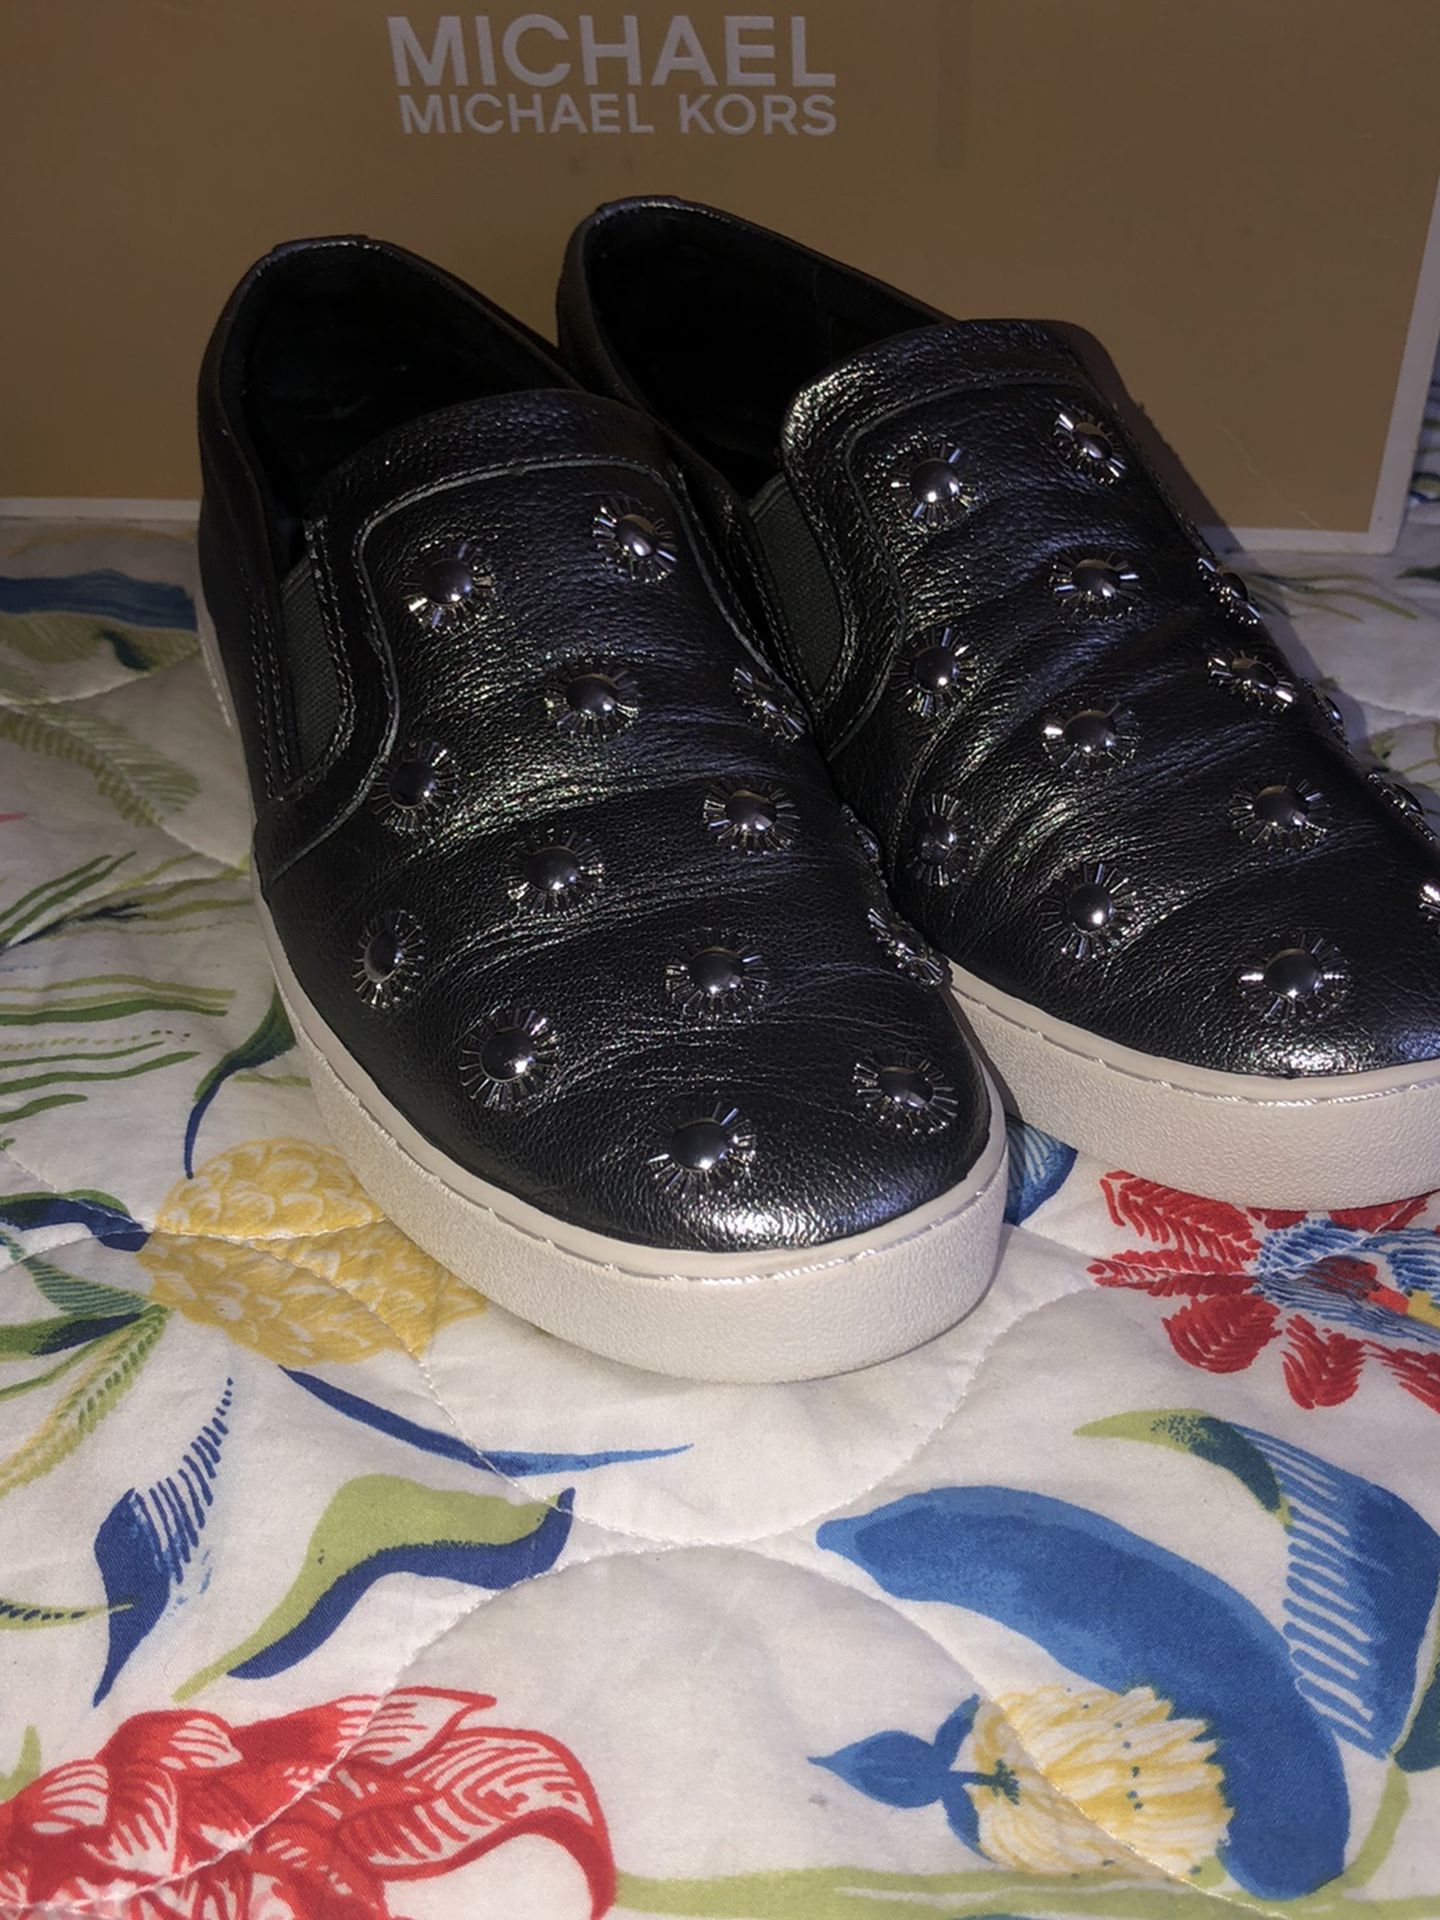 Michael Kors Sneakers Size 7.5